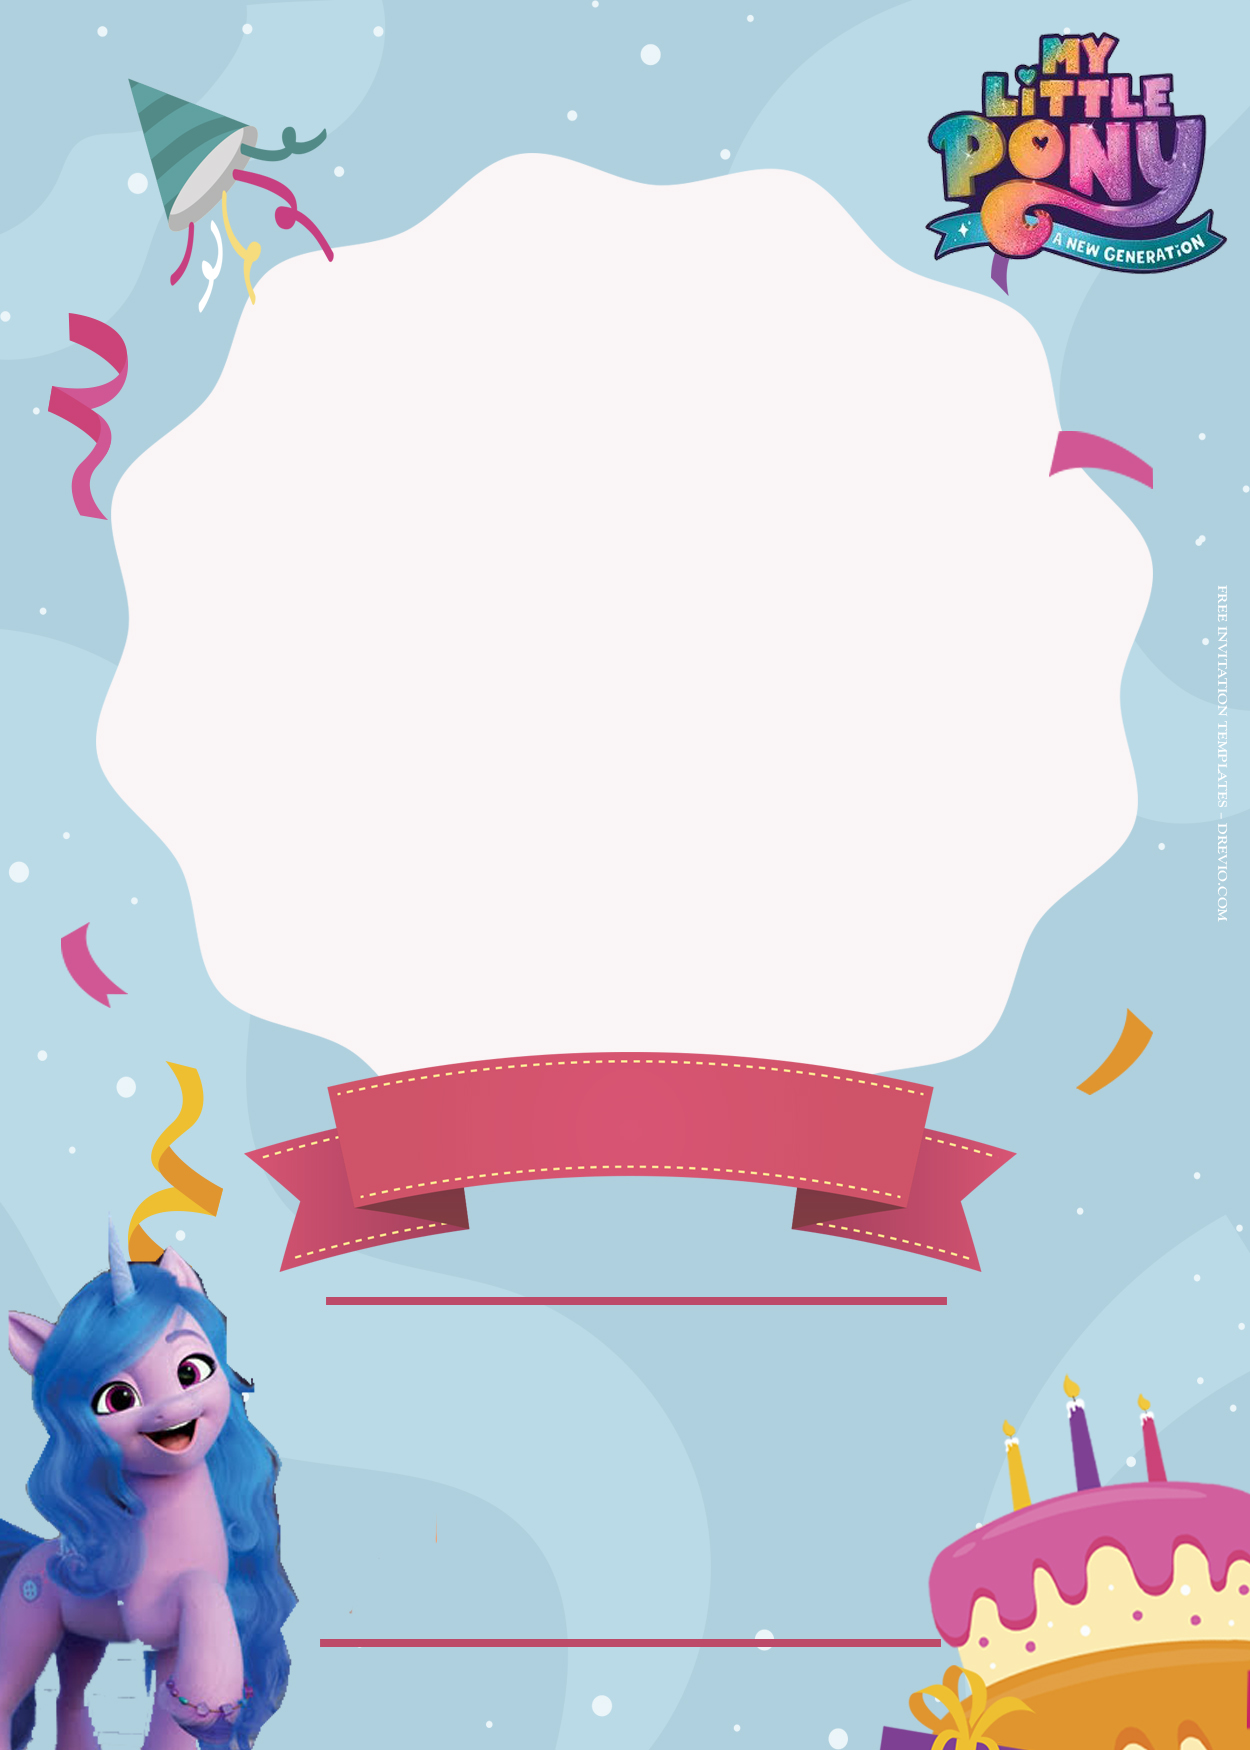 7+ My Little Pony The Next Generation Birthday Invitation Templates Five